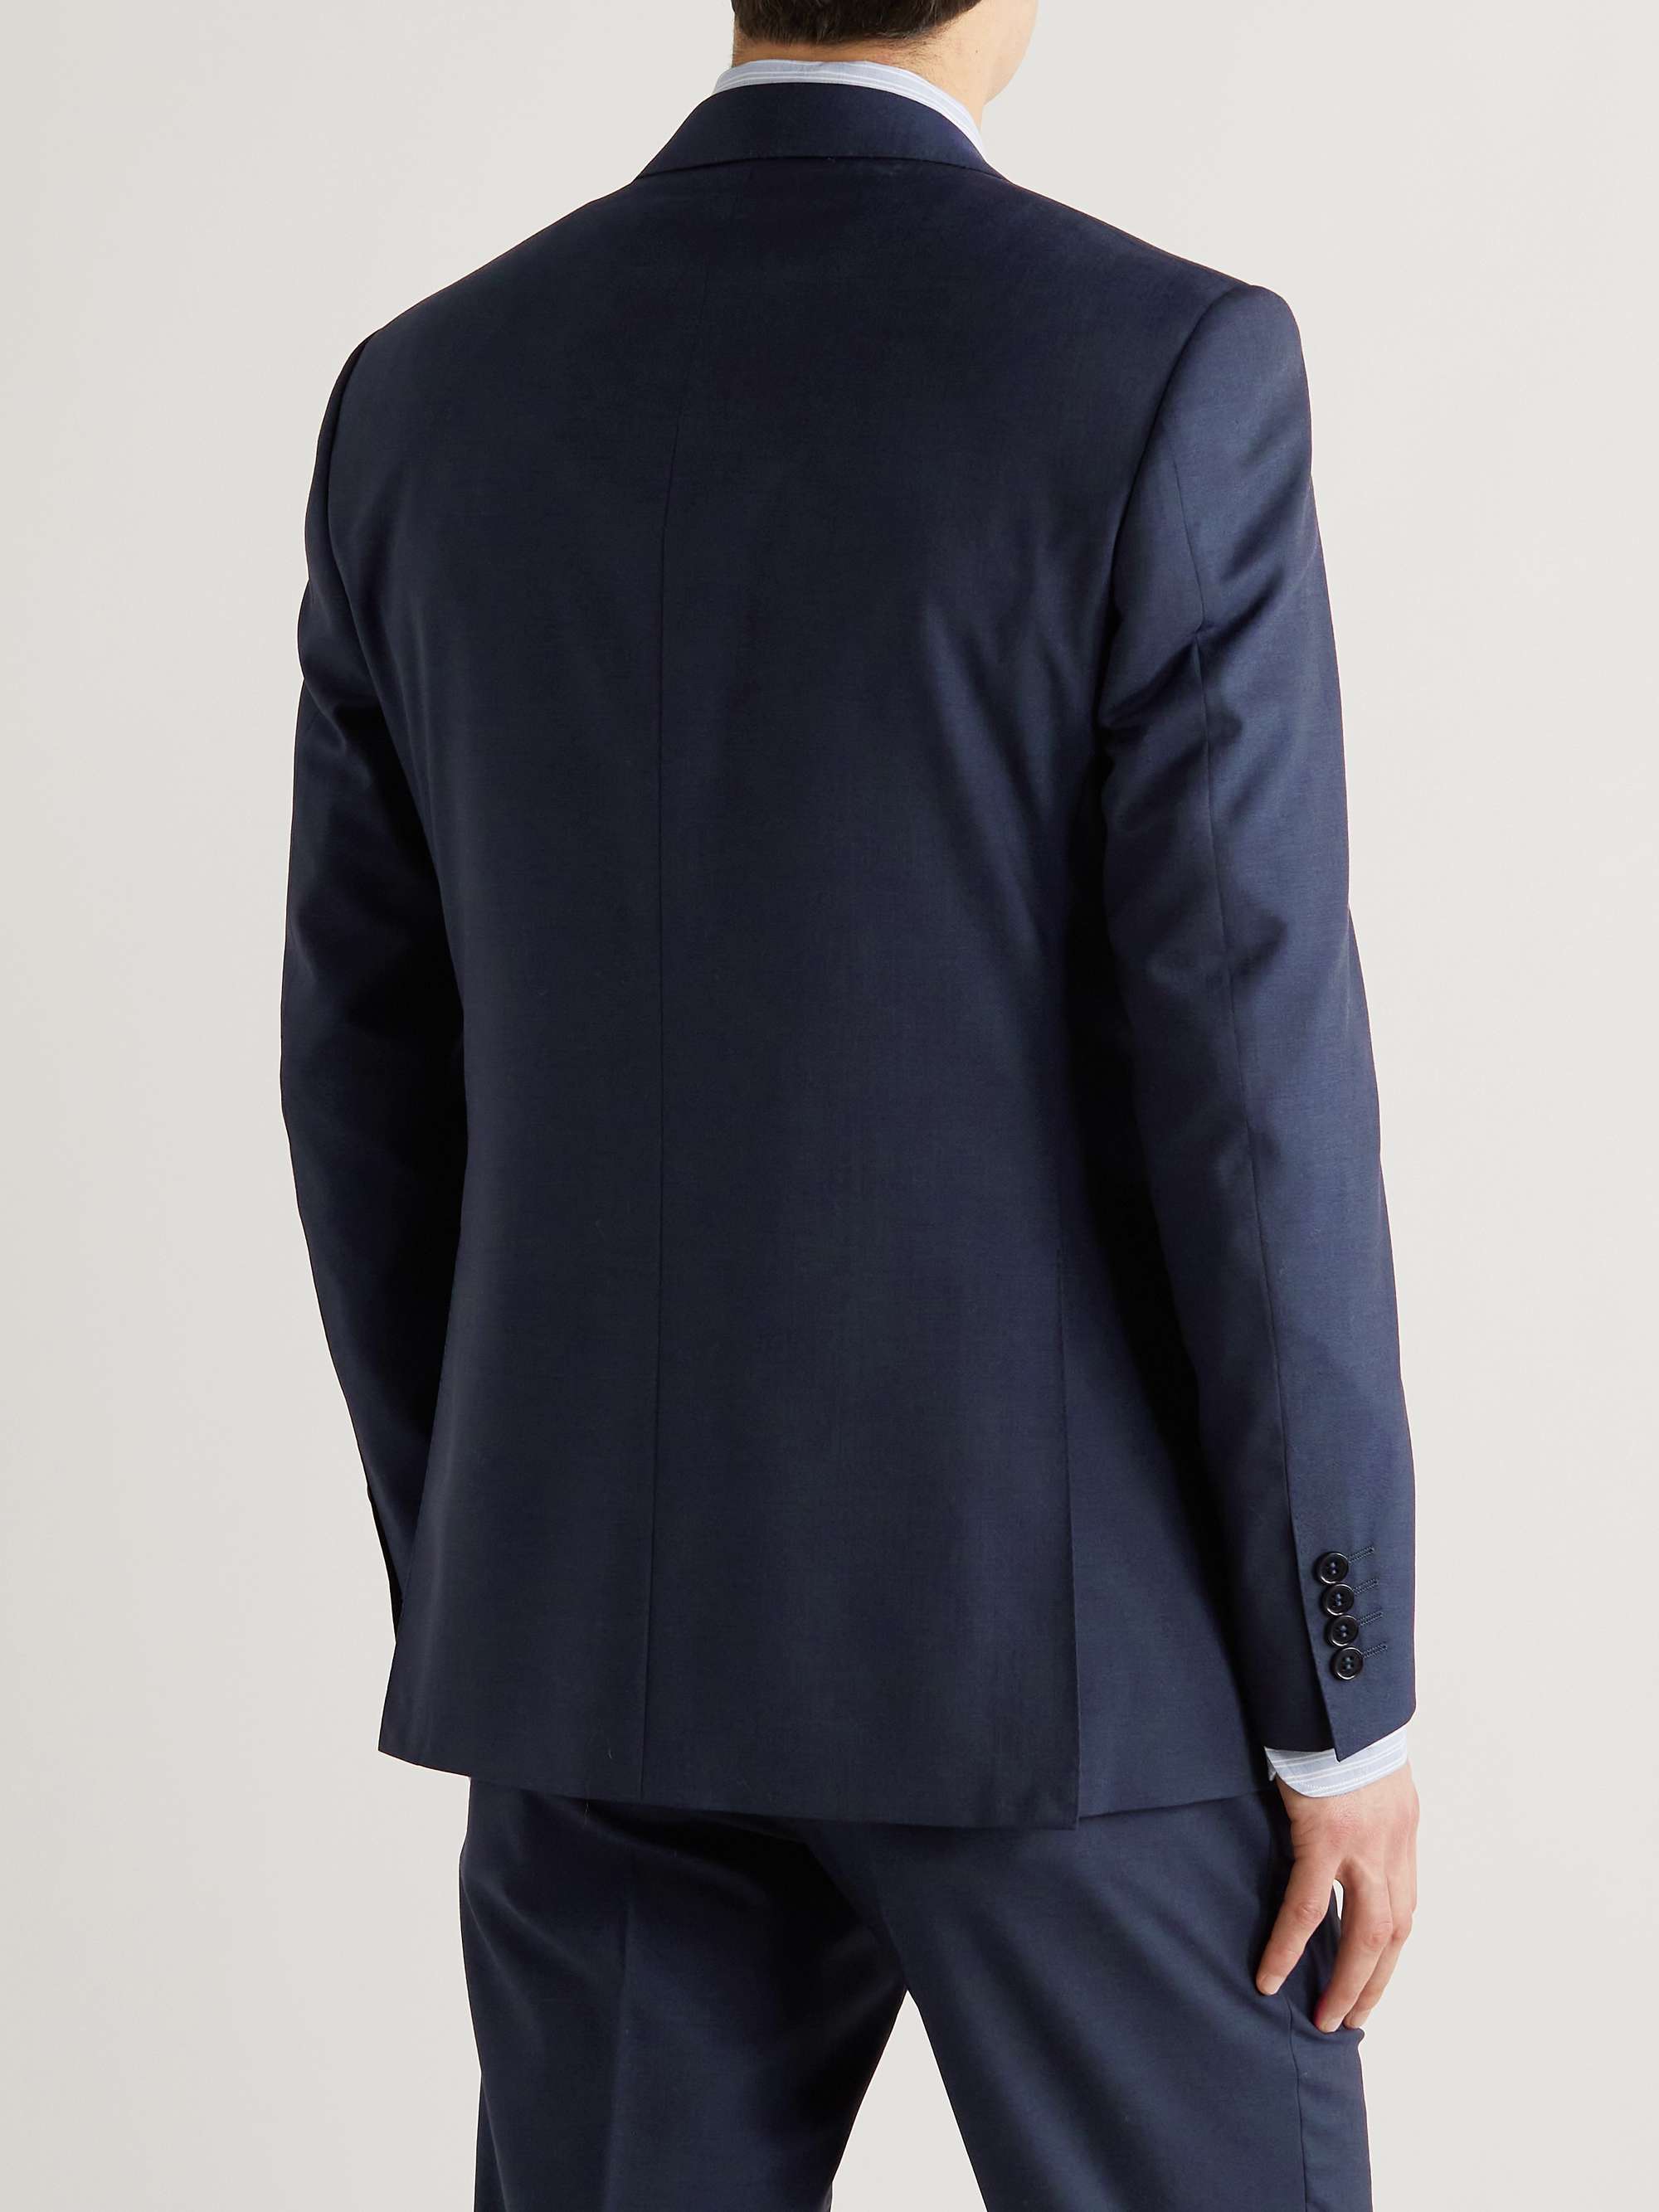 CANALI Slim-Fit Wool Suit Jacket for Men | MR PORTER